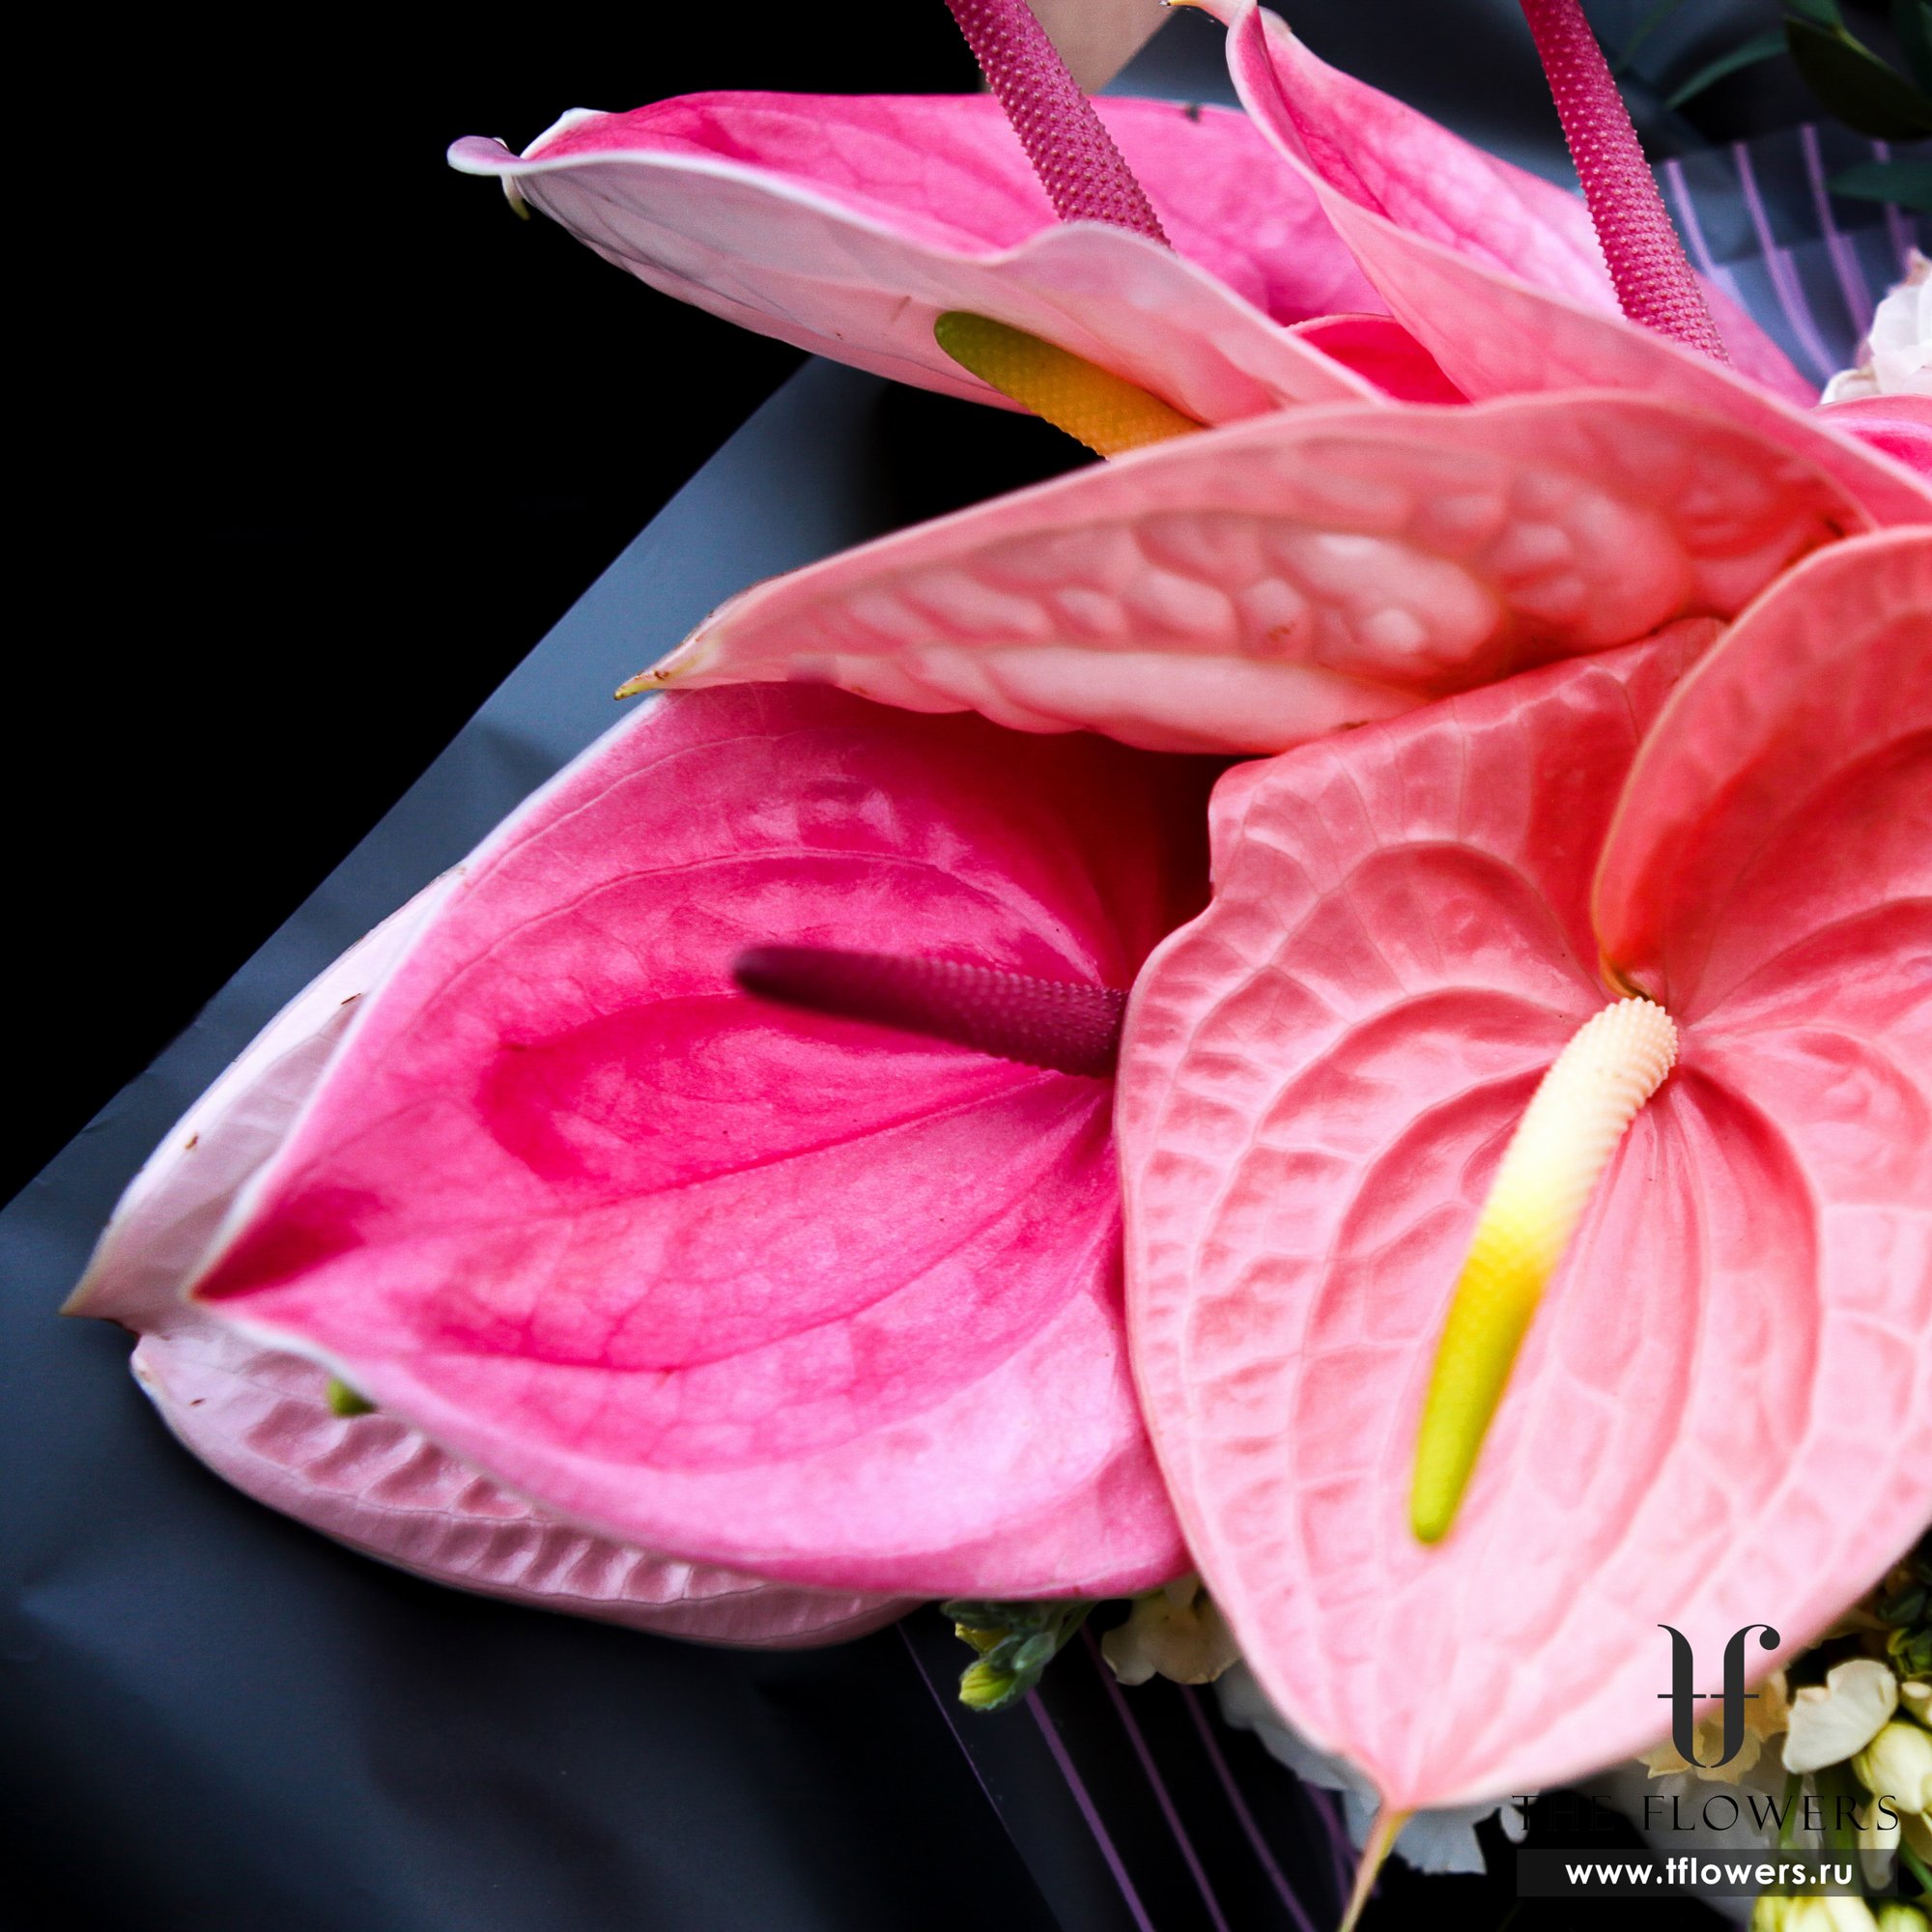 Elegant bouquet with pink anthurium "PINK LILIAN"